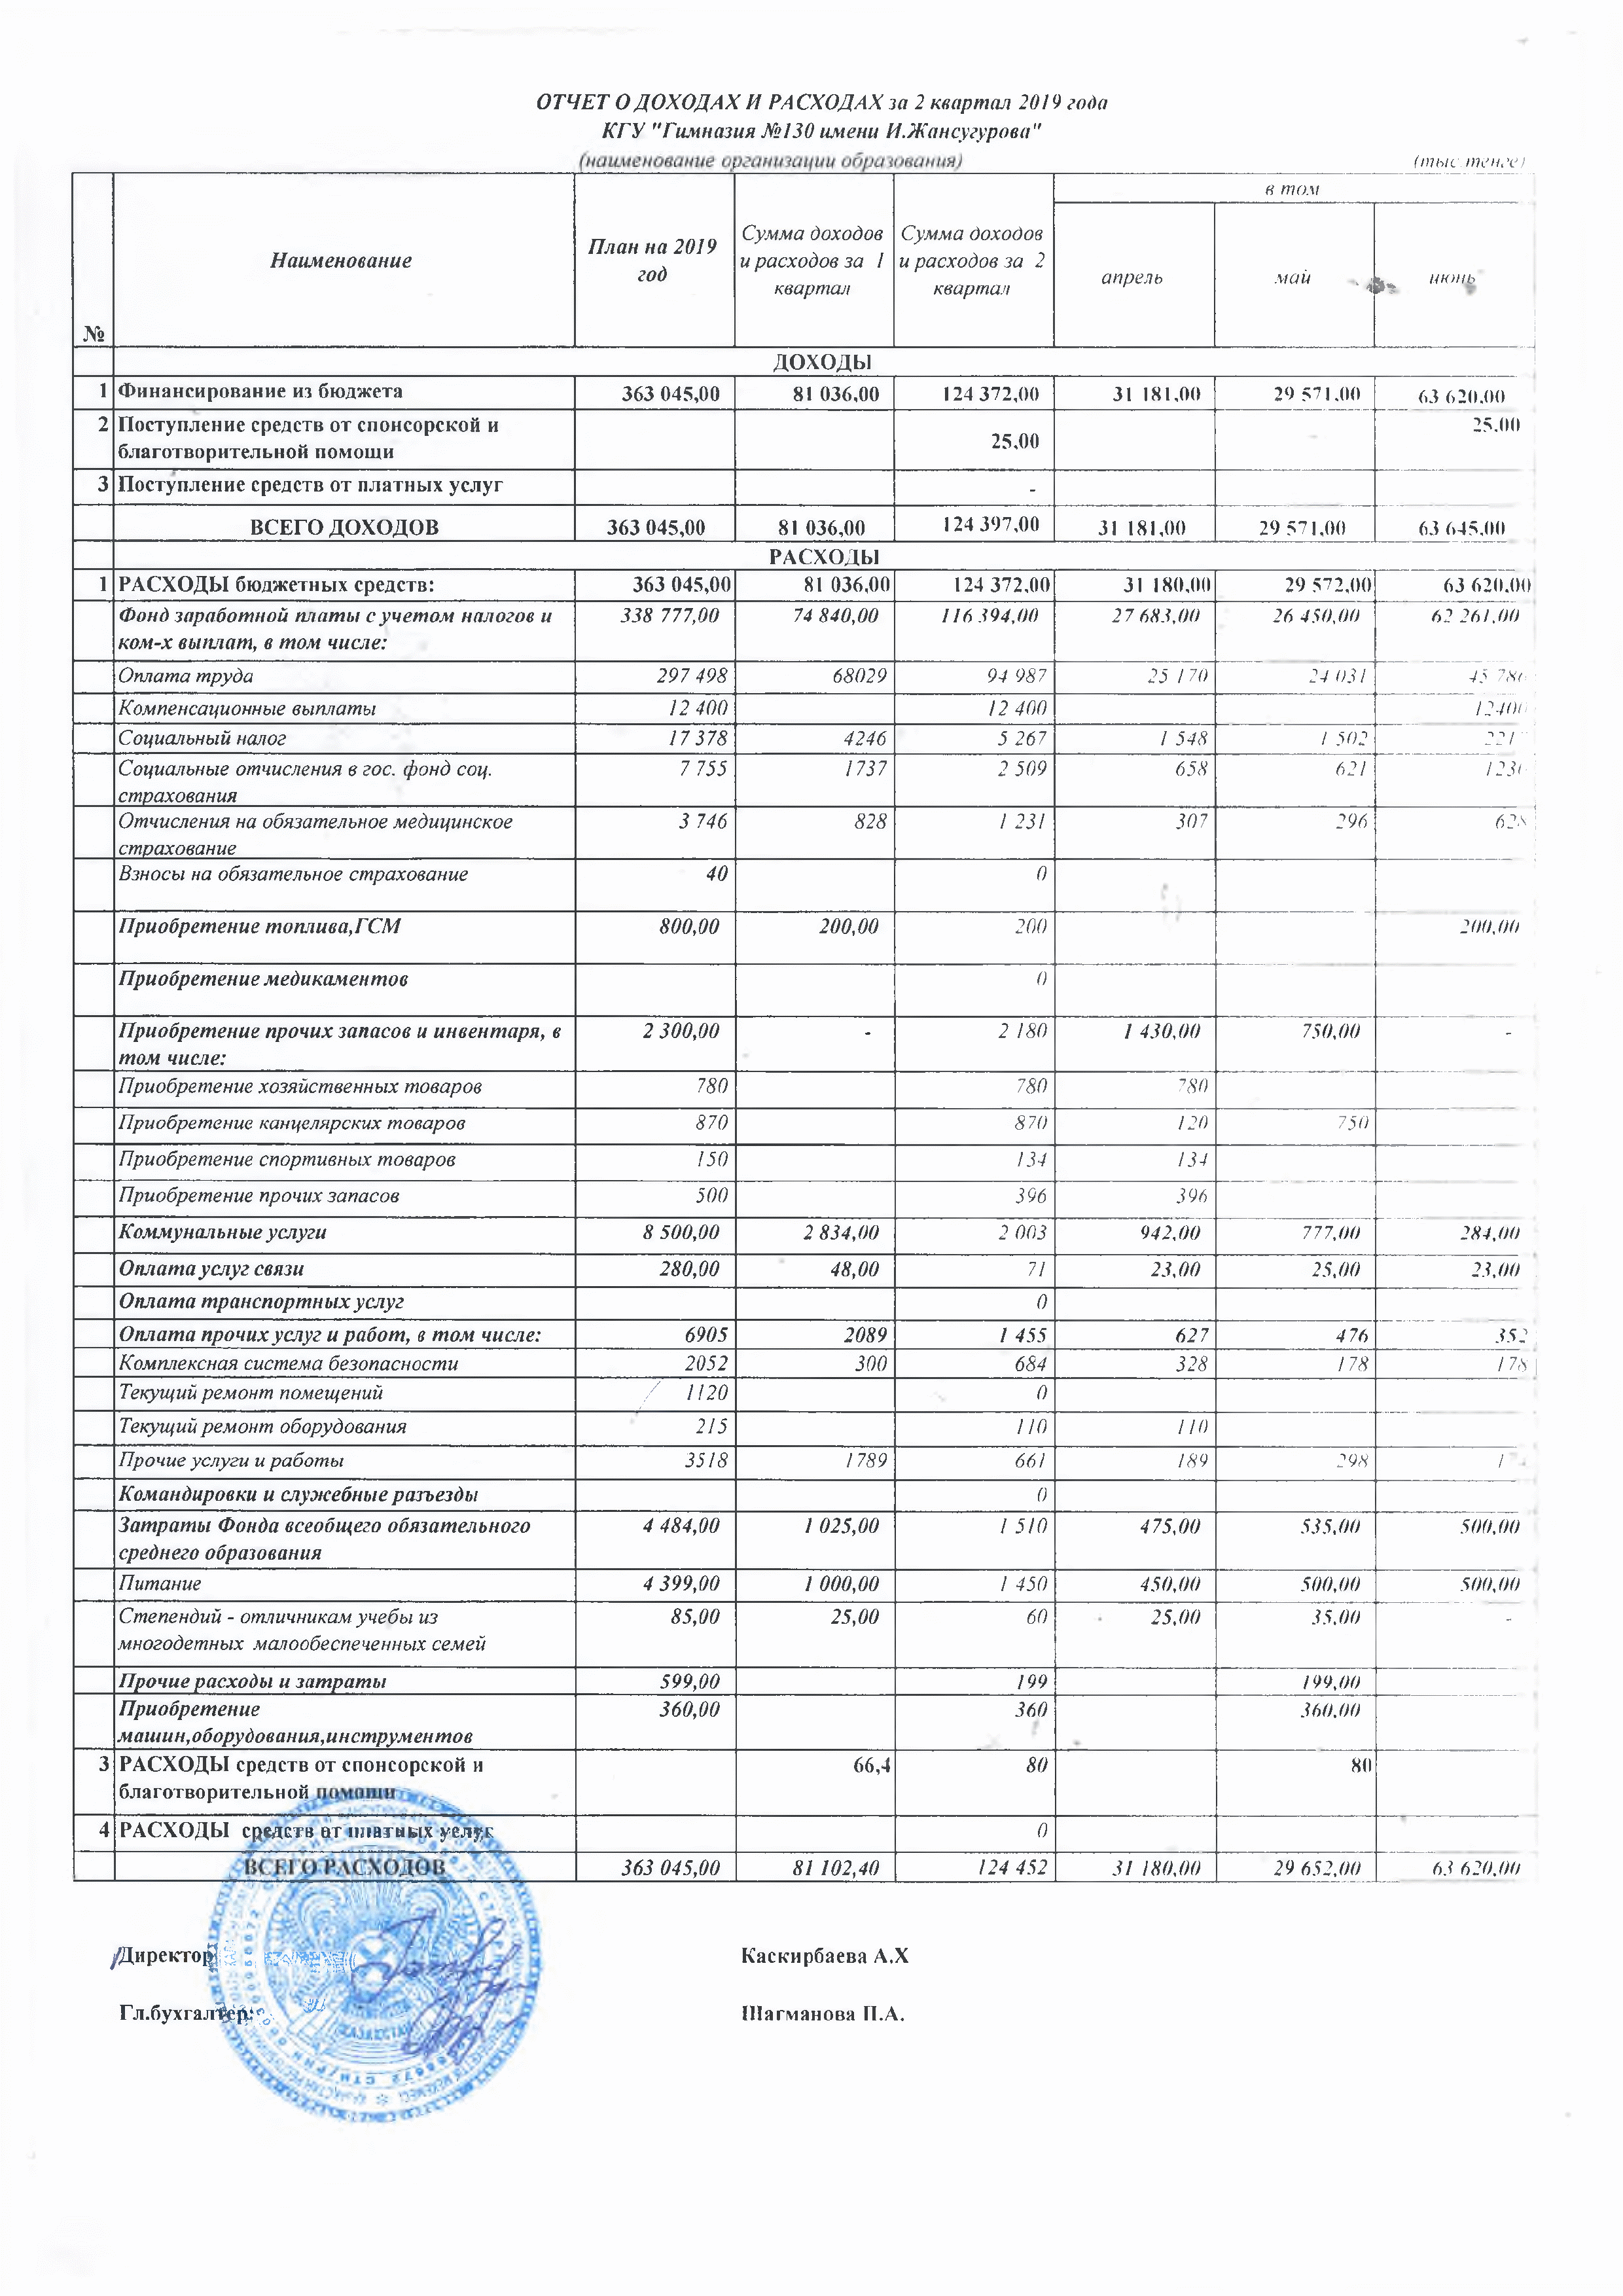 отчет о доходах и расходах за 2 кв